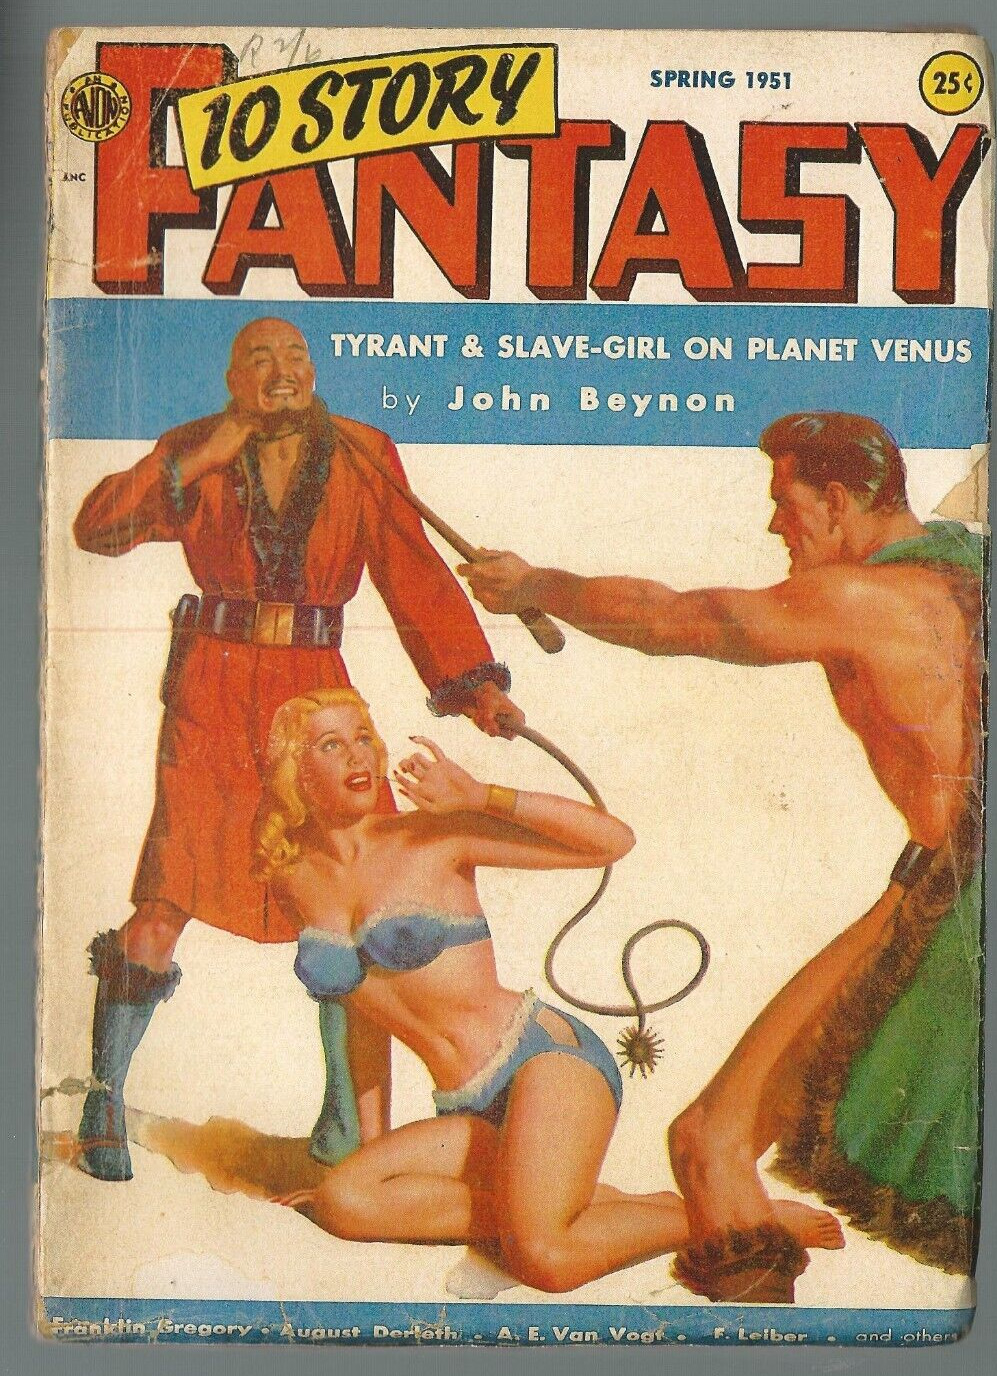 Avon 10 Story Fantasy Spring 1951 Tyrant & Slave-Girl on Planet Venus Premier